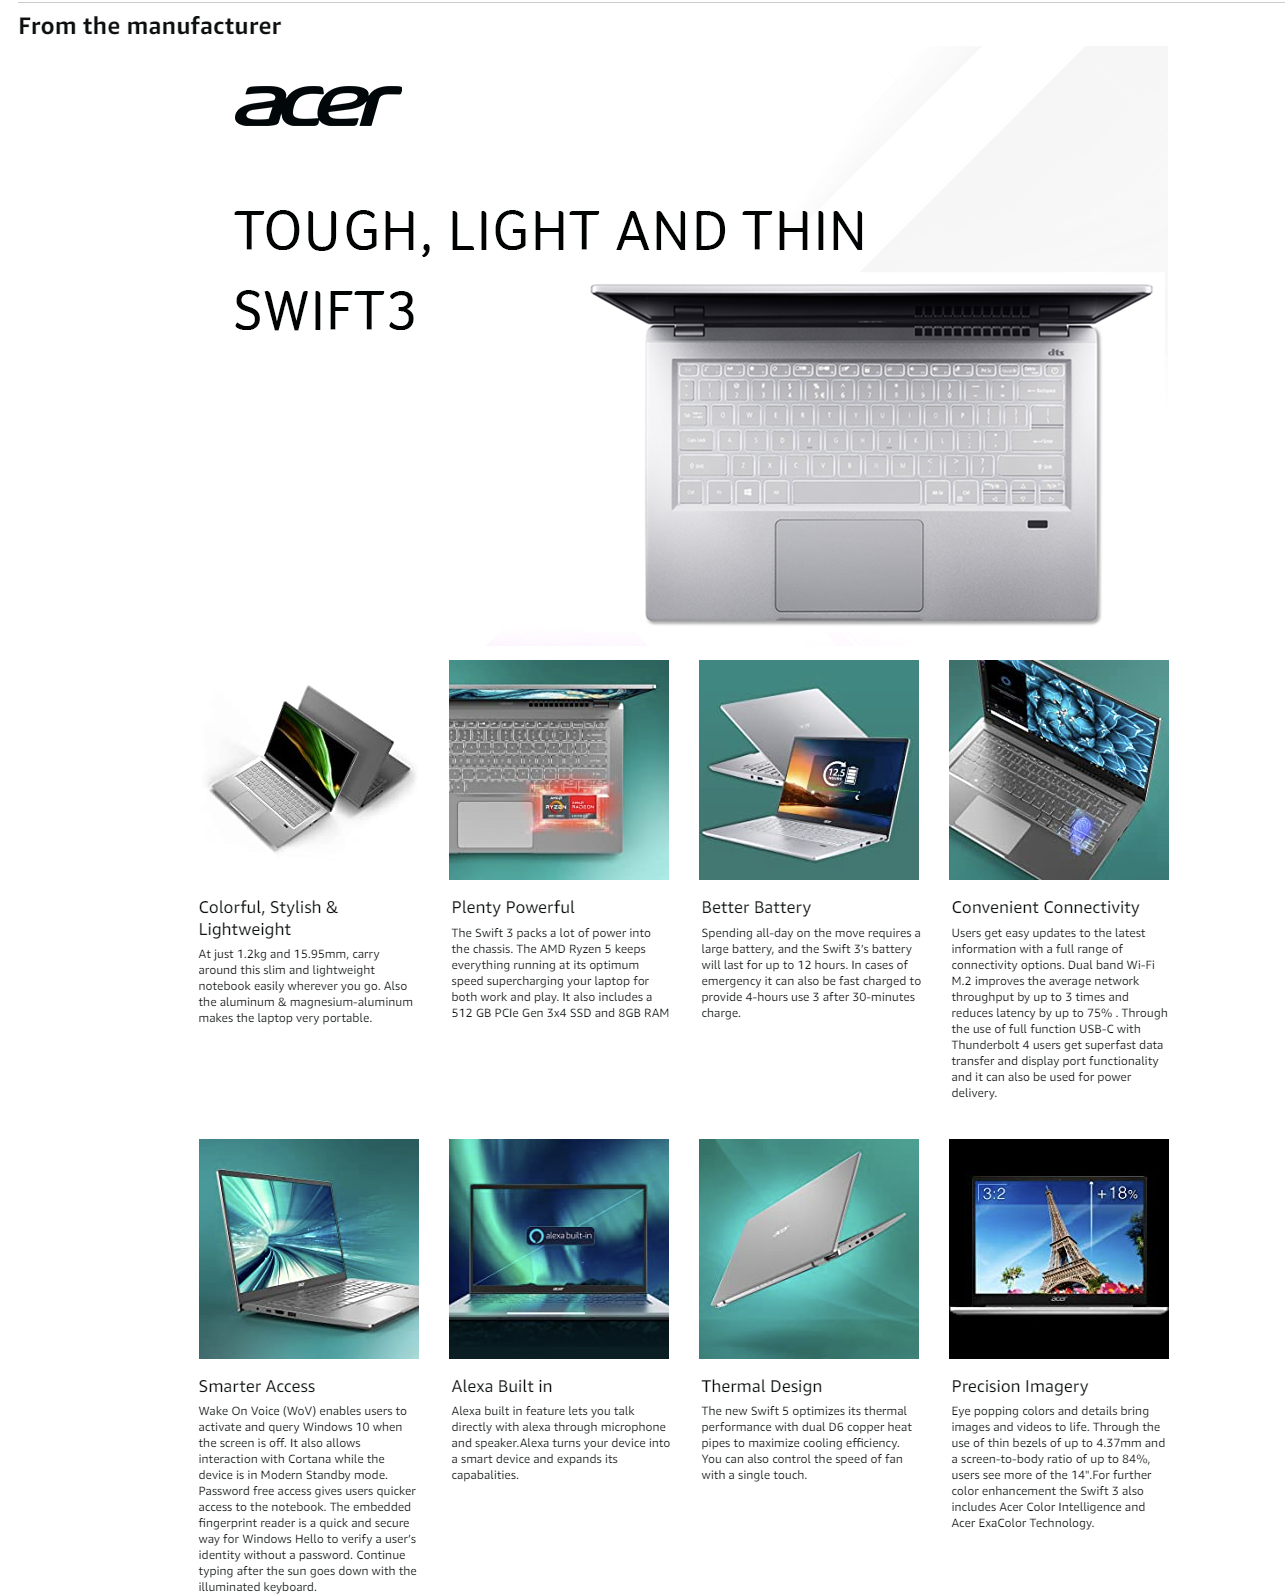 Acer Swift 3 SF314-43 Ryzen 5 Windows 10 Home Thin and Light Laptop (8GB RAM, 512GB SSD, AMD Radeon Graphics, MS Office, 35.56cm, Silver) (ACERSWIFT3NXAB1SI001)